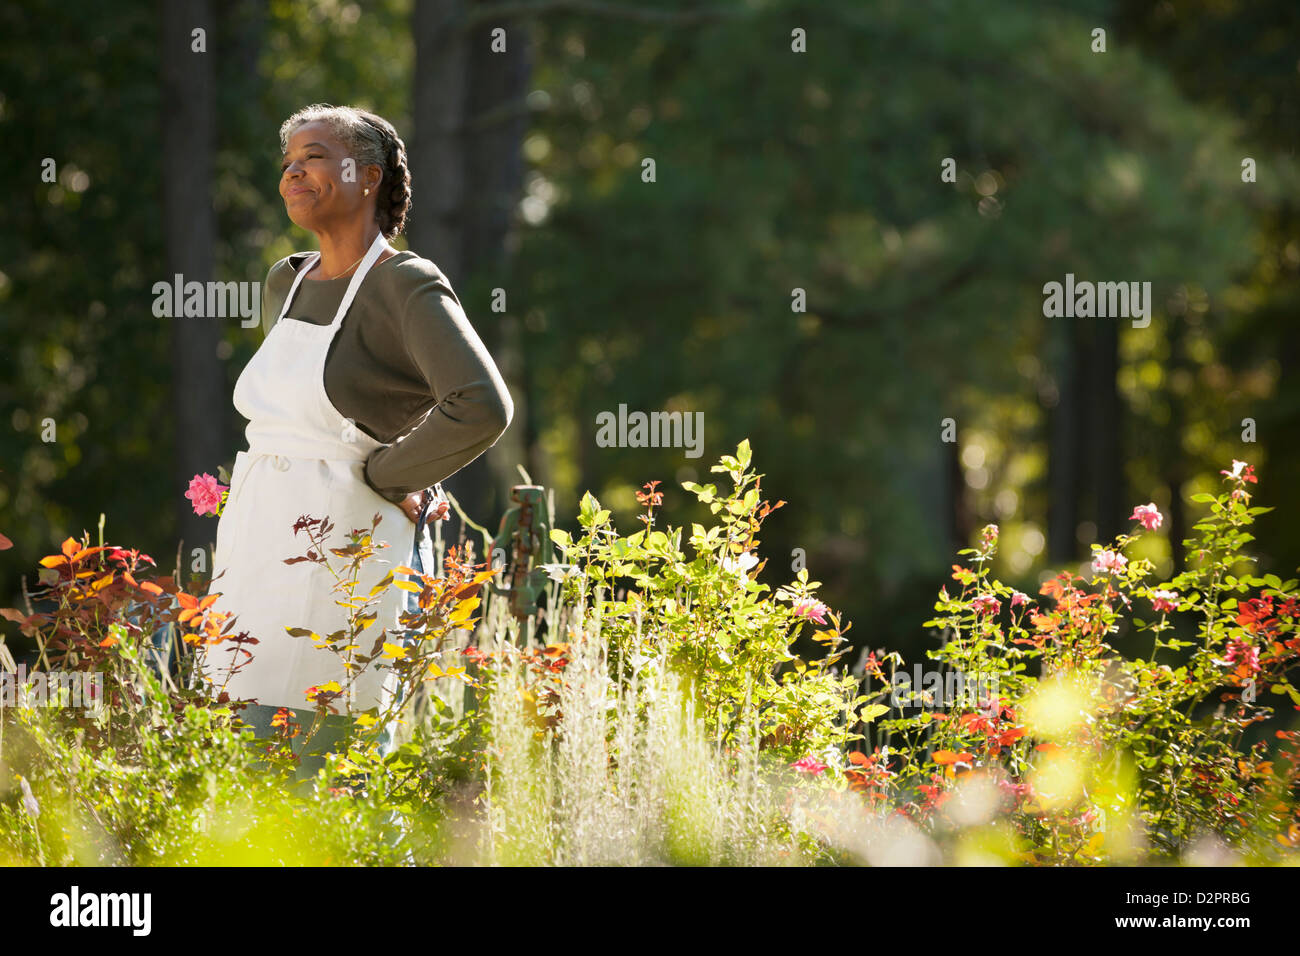 Mixed race woman wearing apron in field Stock Photo